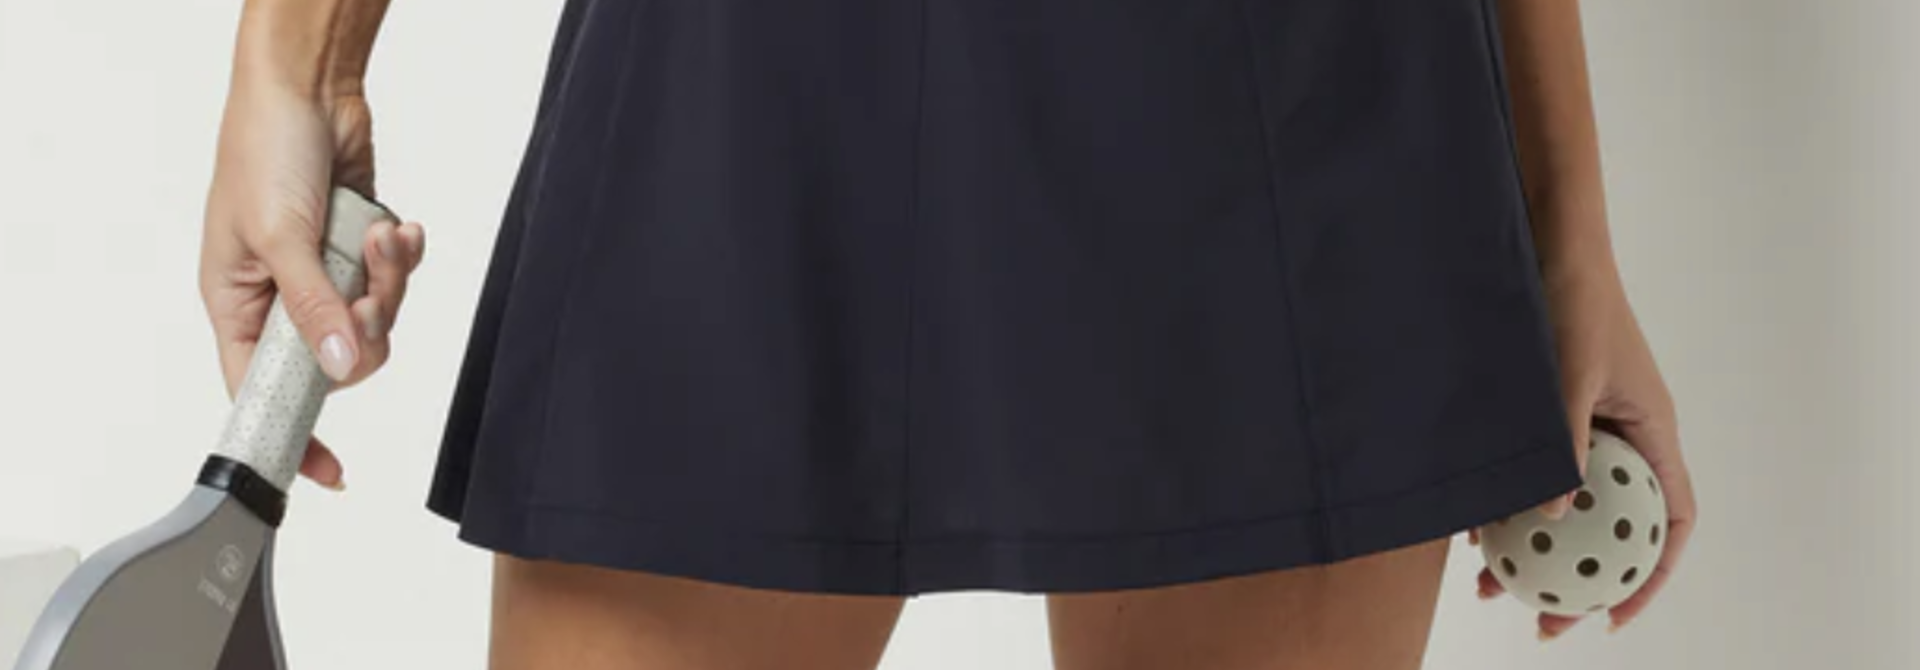 Clementine Skirt